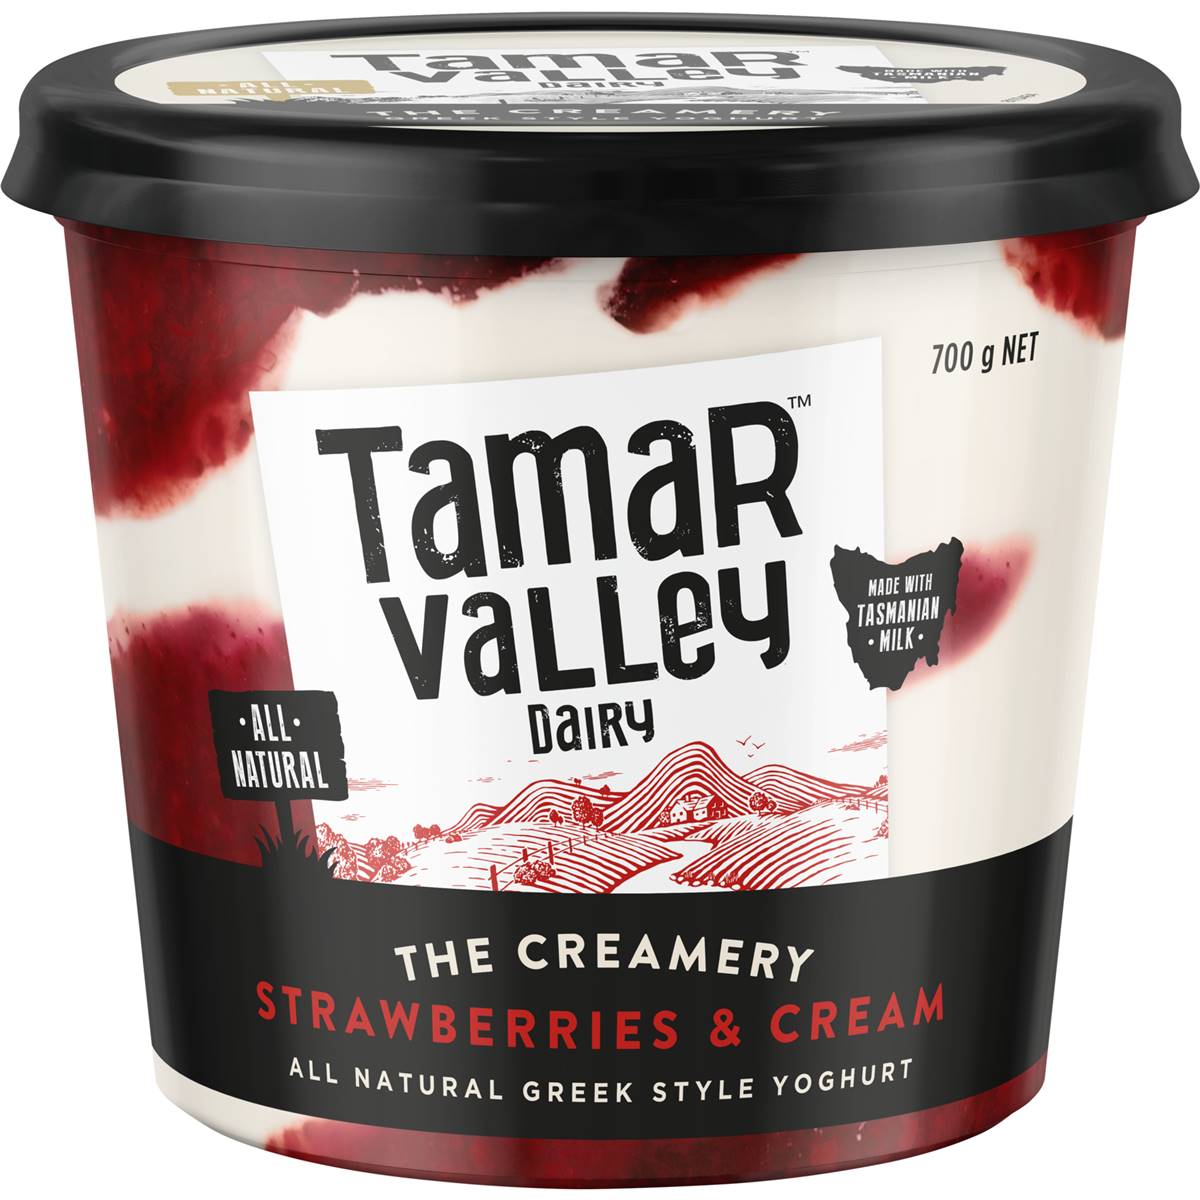 Calories in Tamar Valley Dairy Yoghurt Strawberry & Cream